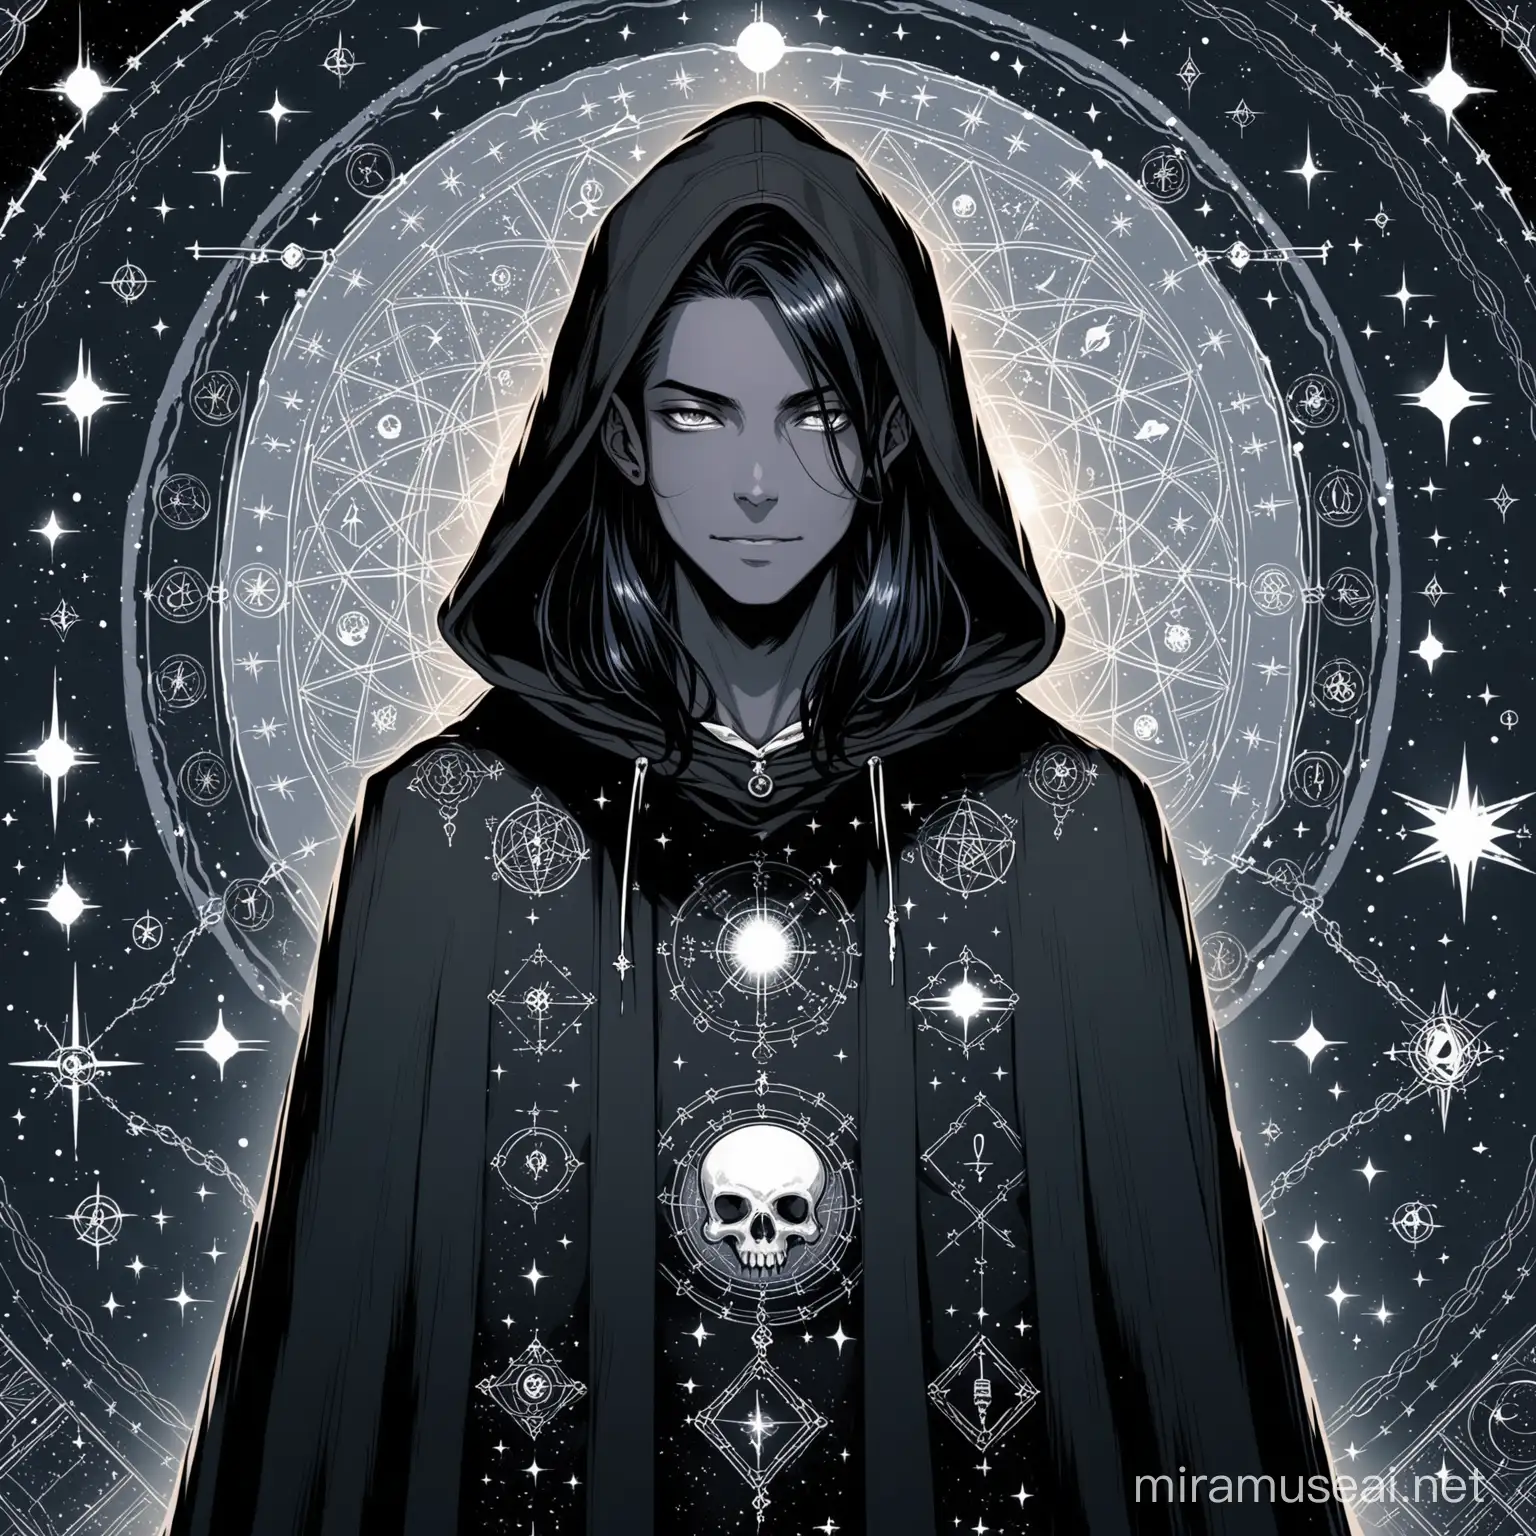 Androgynous man, grey skin, long black hair, alchemist, hood, cloak, patterned with alchemical/astrological symobls.